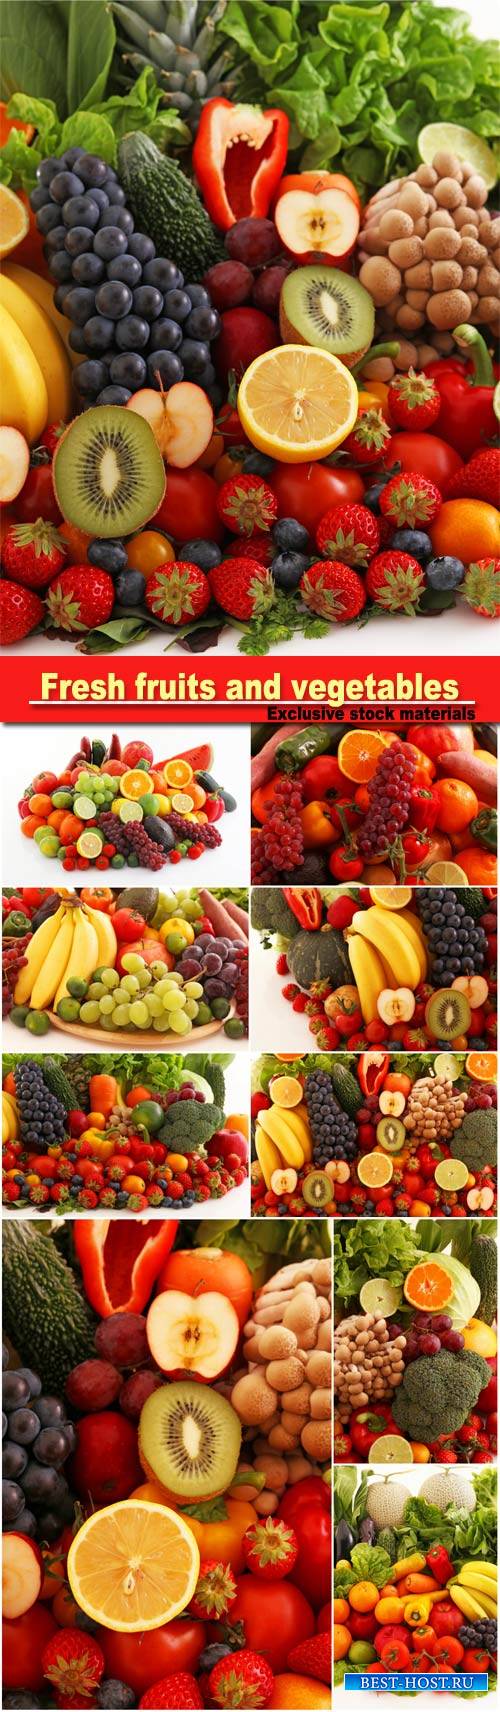 Fresh fruits and vegetables, grapes, bananas, oranges, kiwi